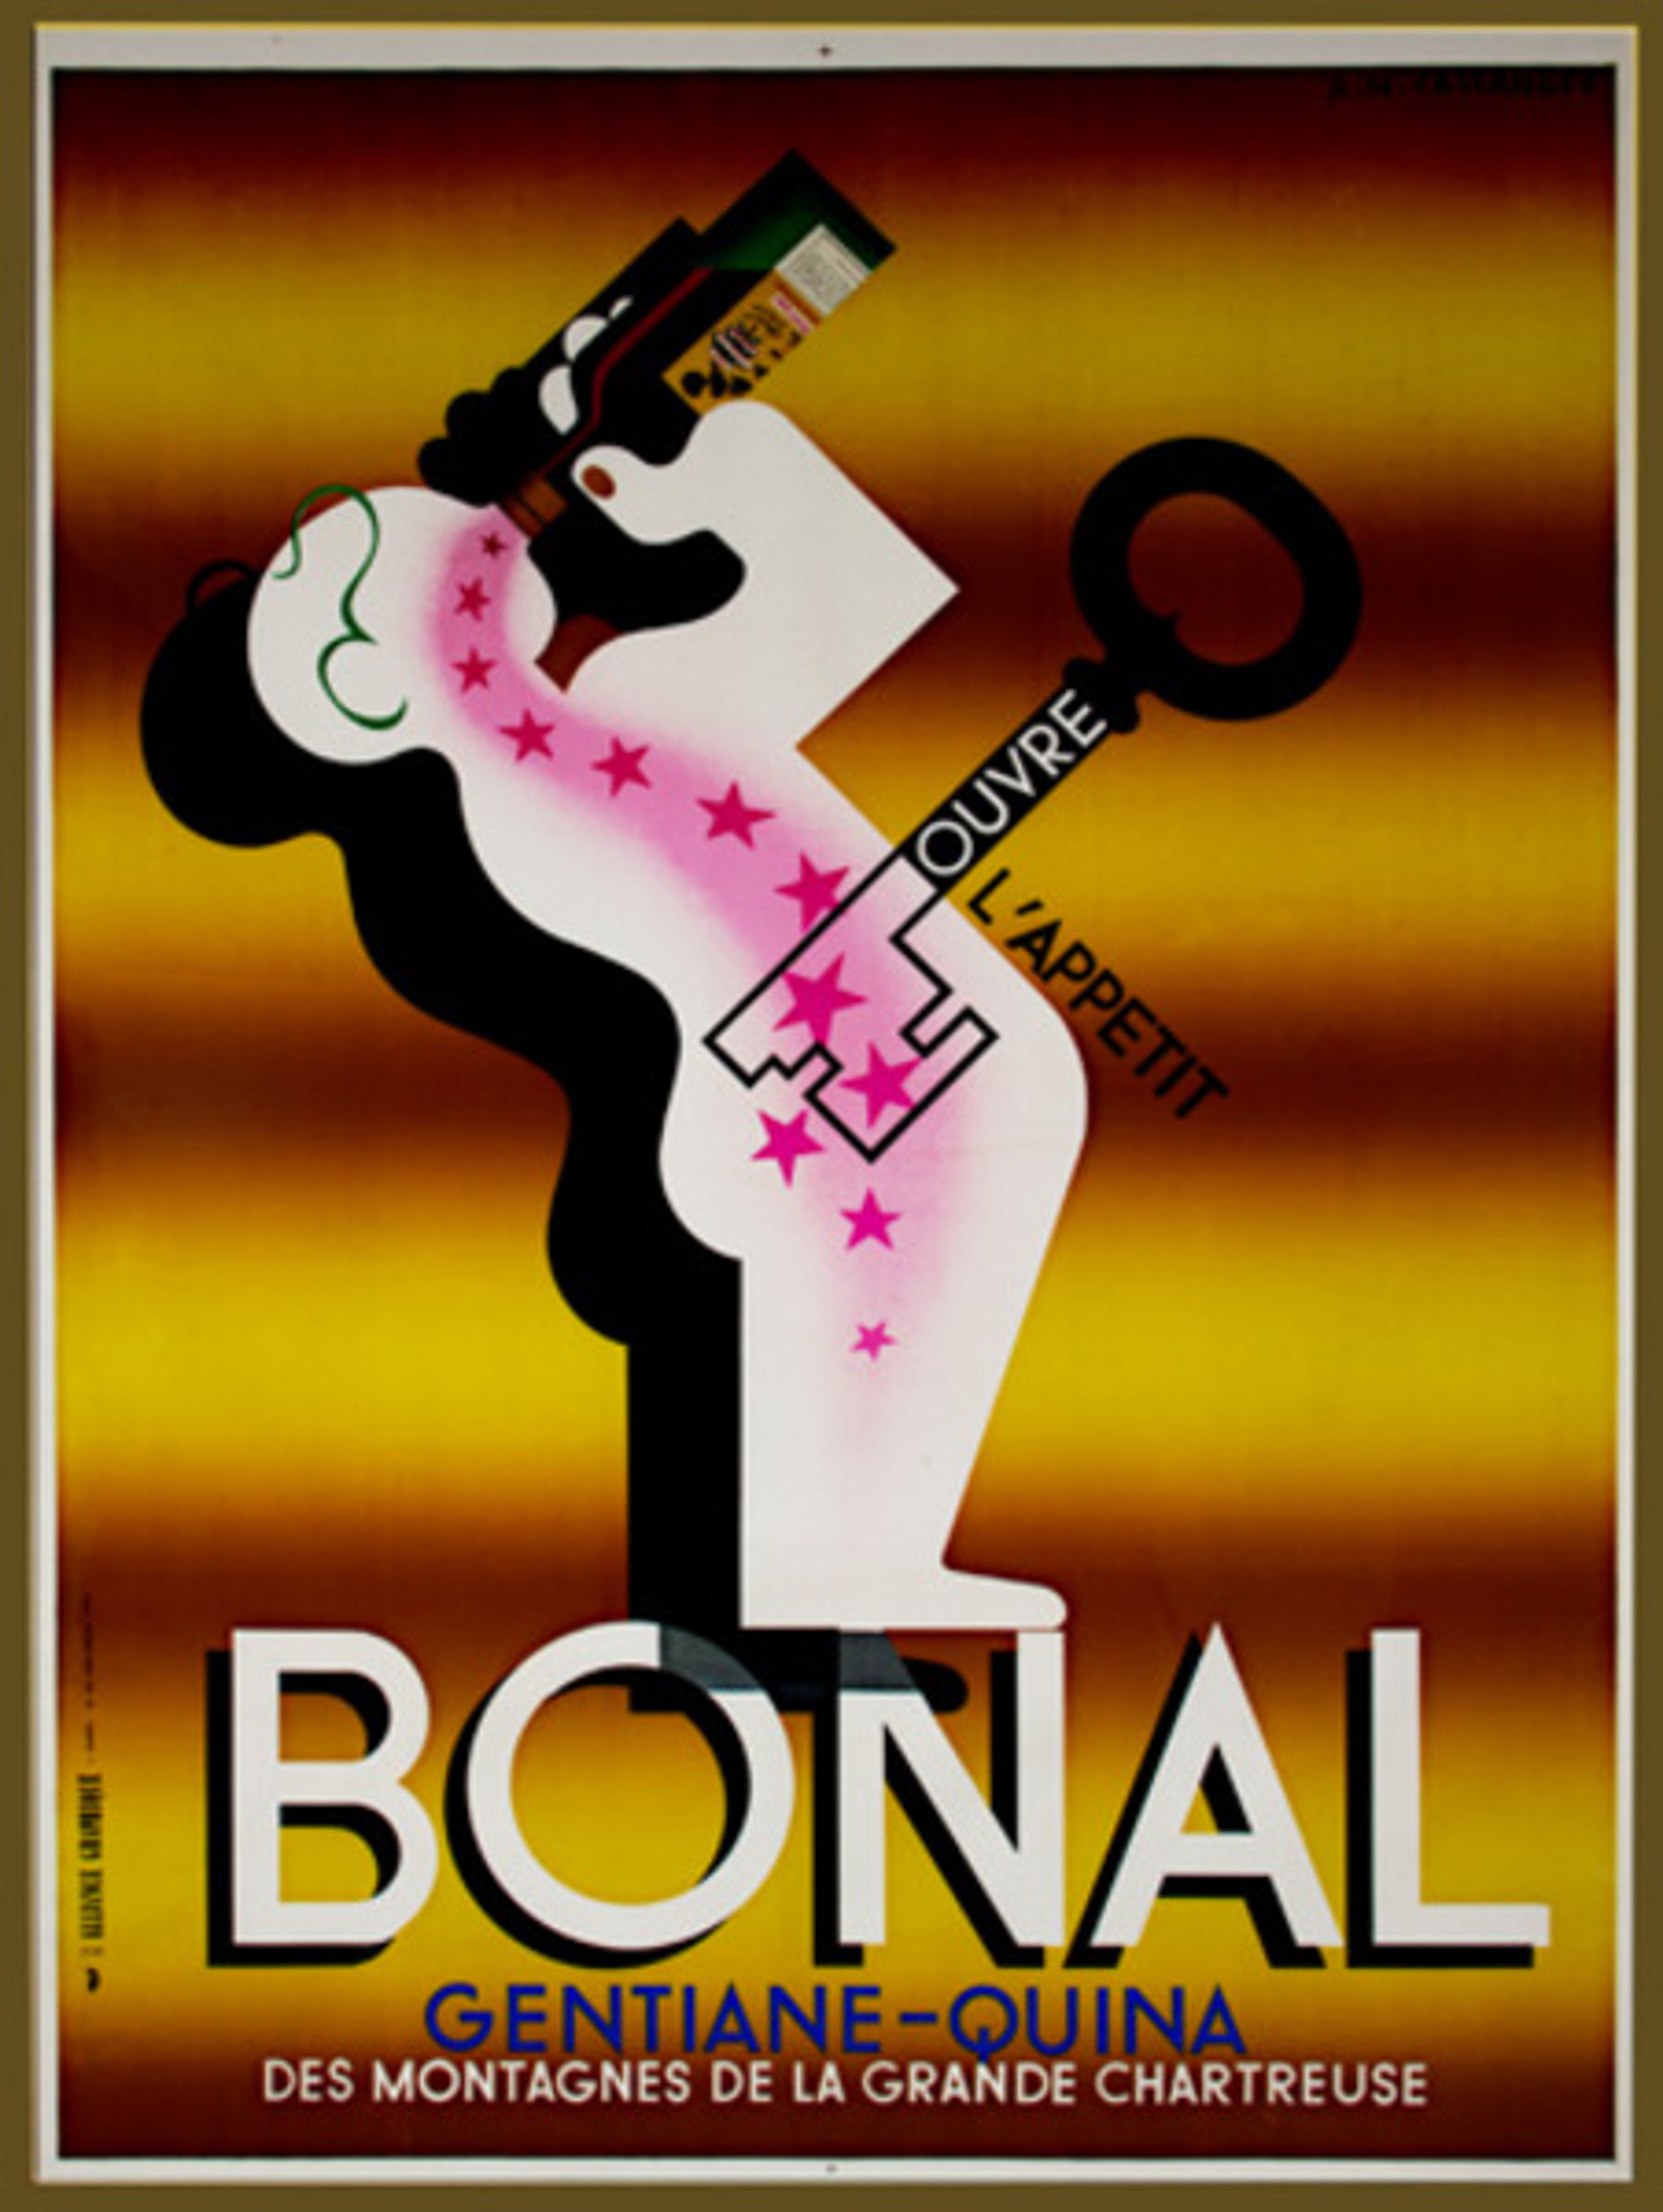 Bonal by A.M. (Adolphe Mouron) Cassandre